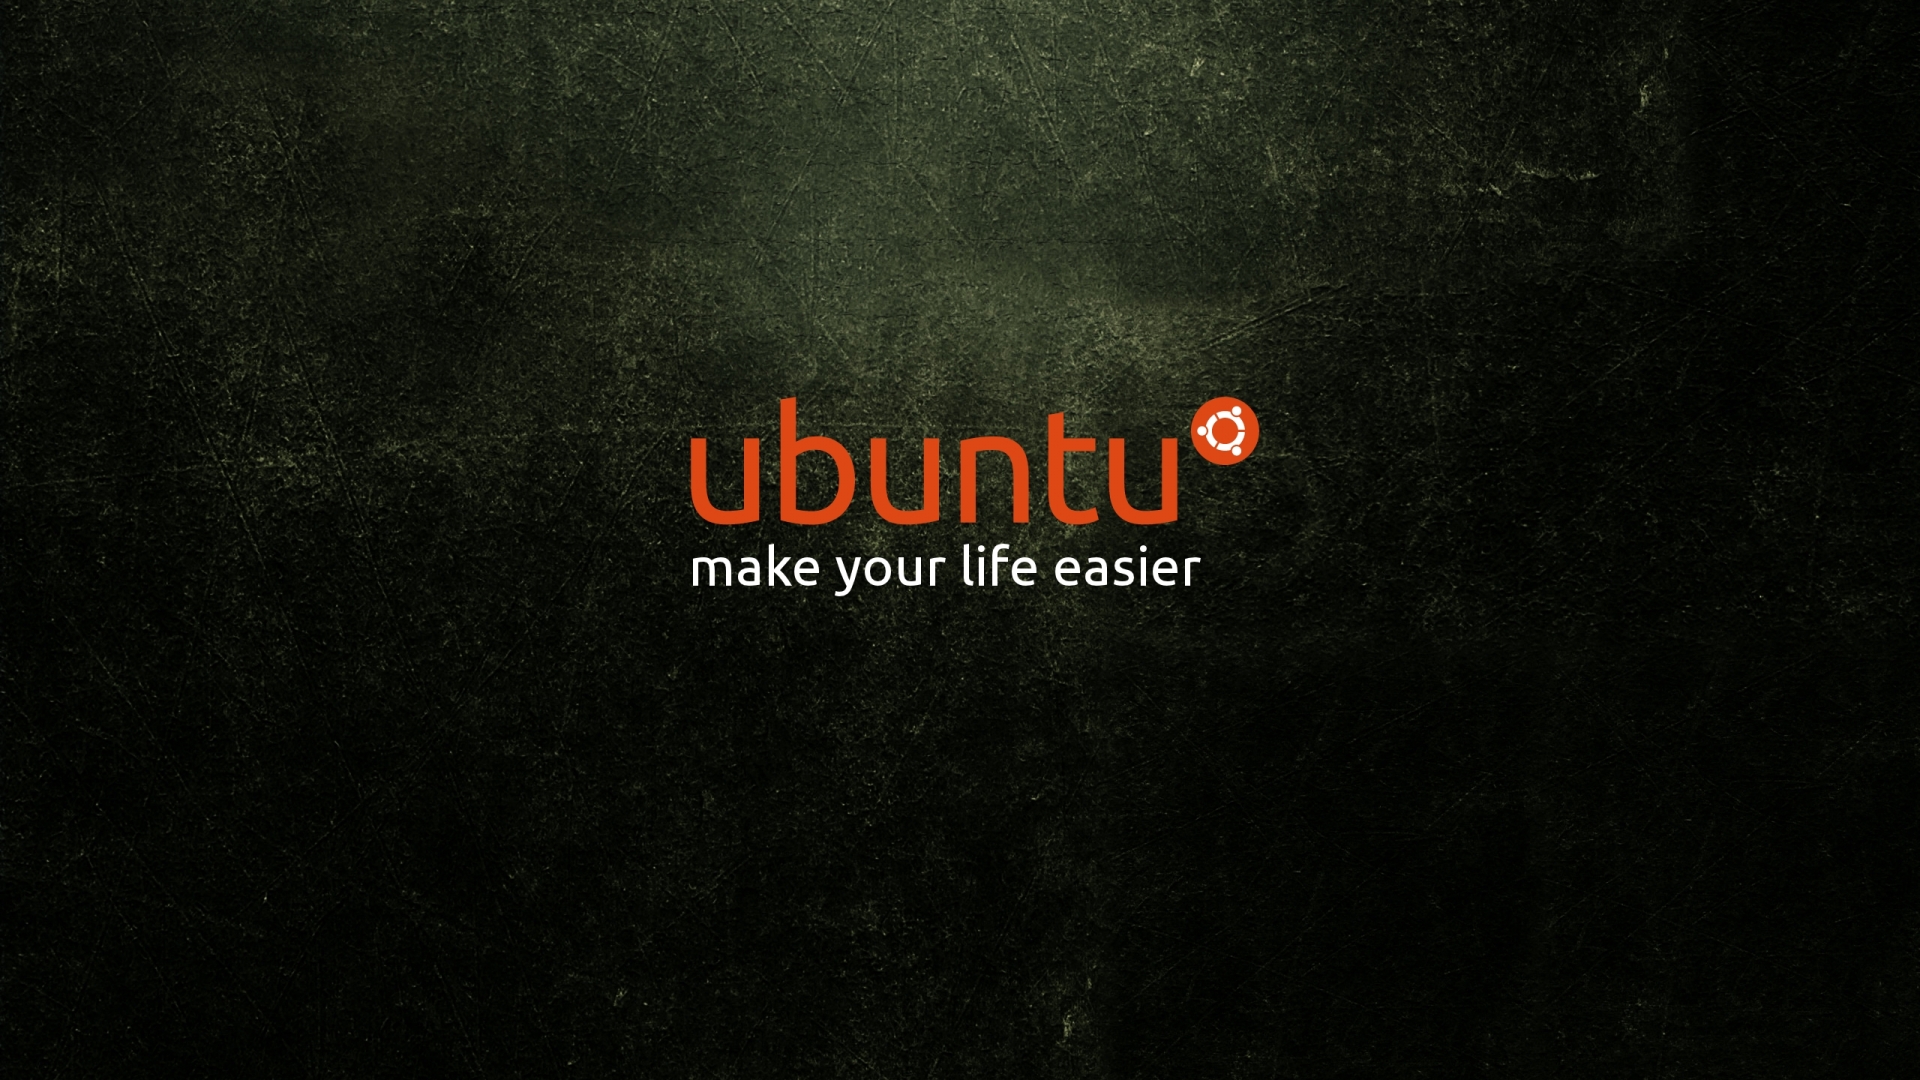 Wallpaper Ubuntu Resoluciones